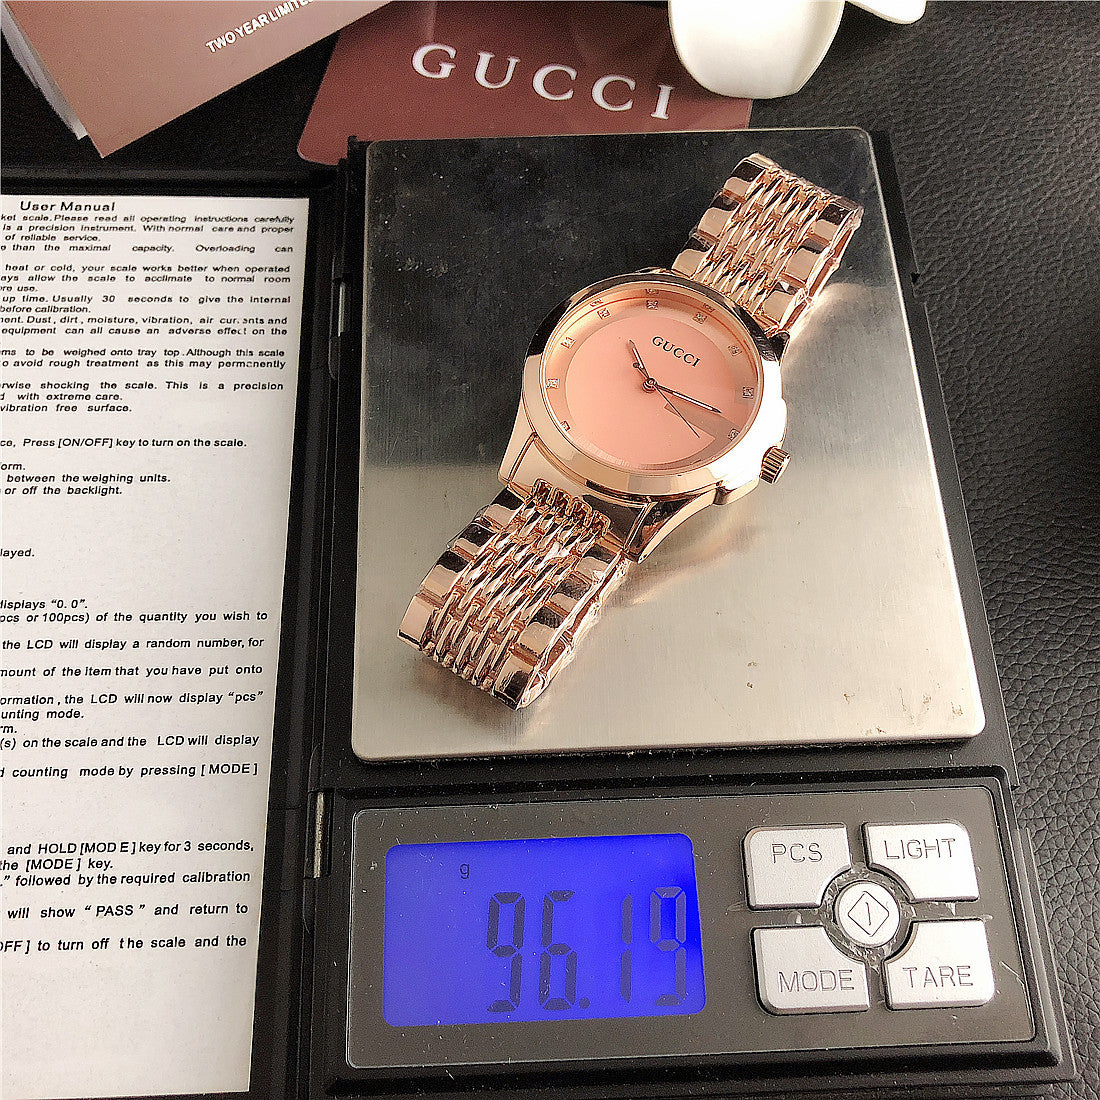 Gucci Watch